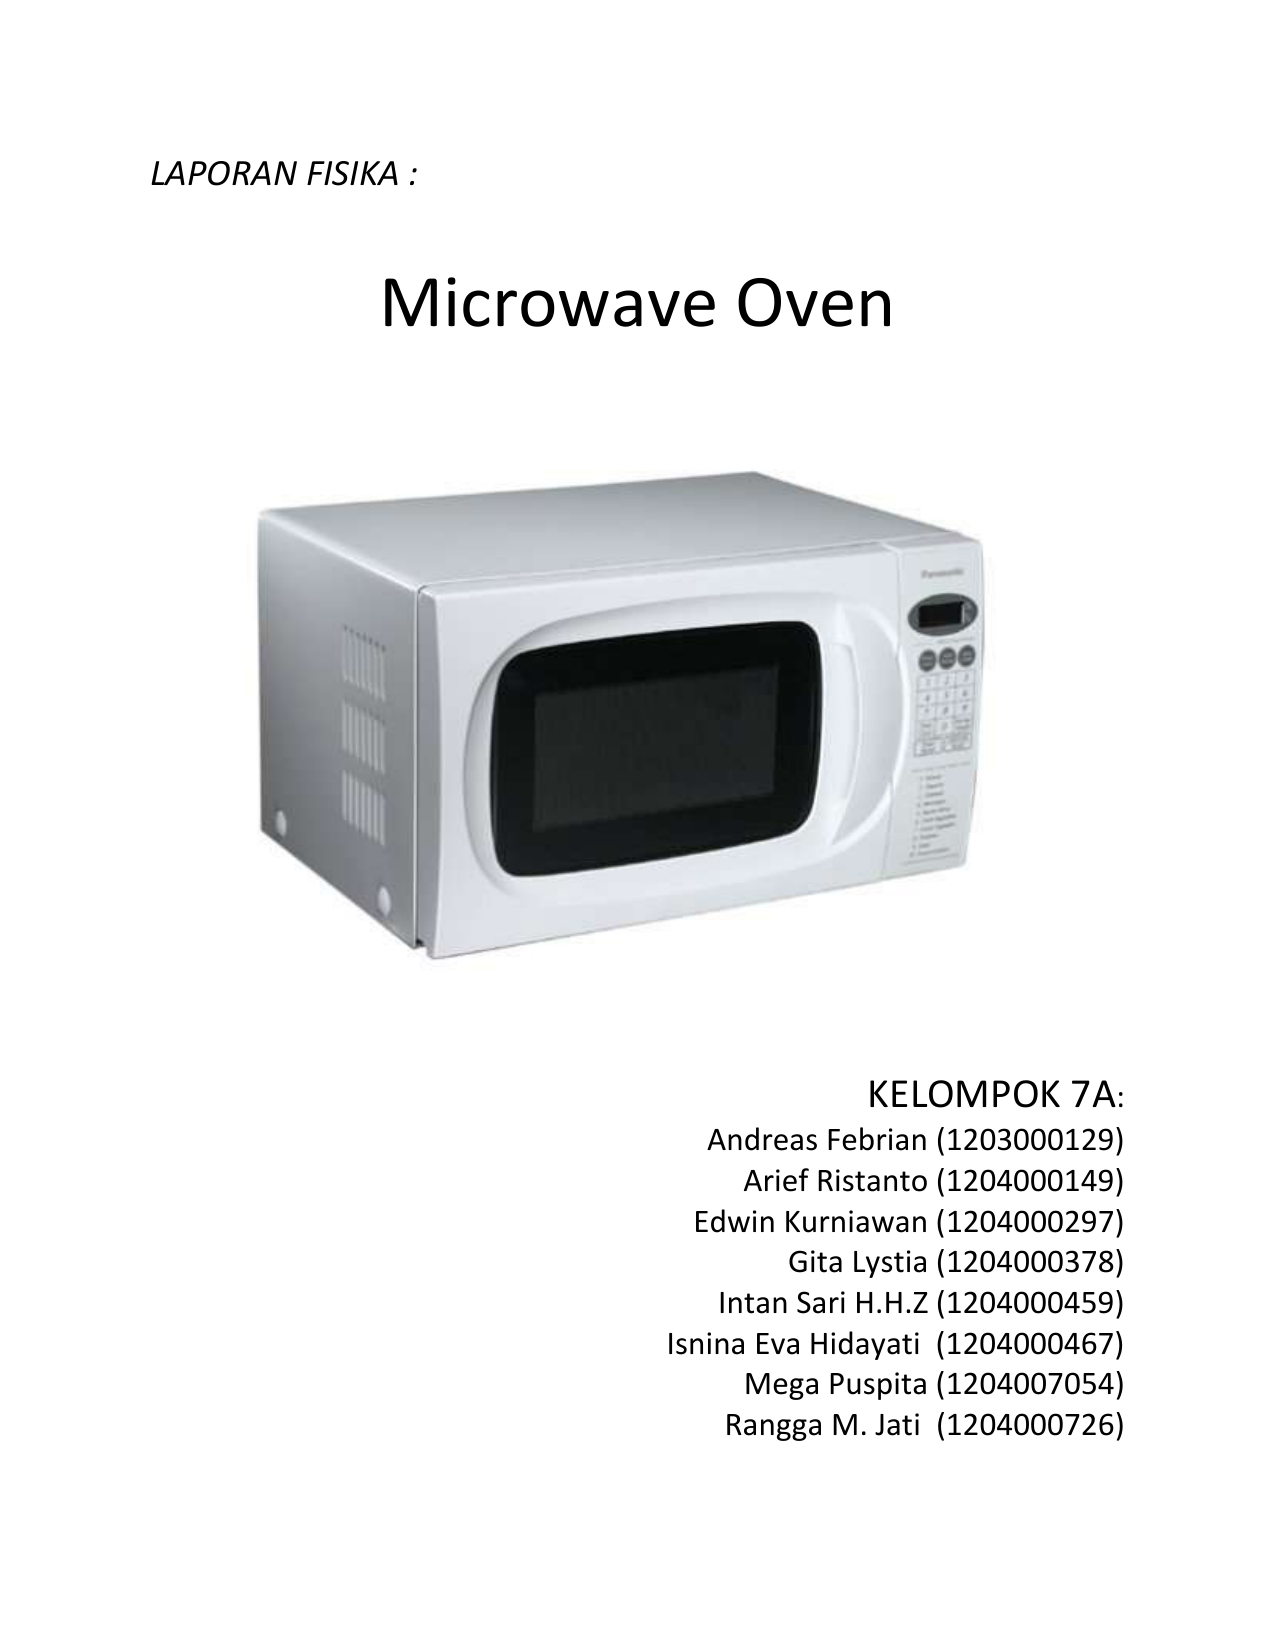 Makalah Fisika Mikrowave Oven